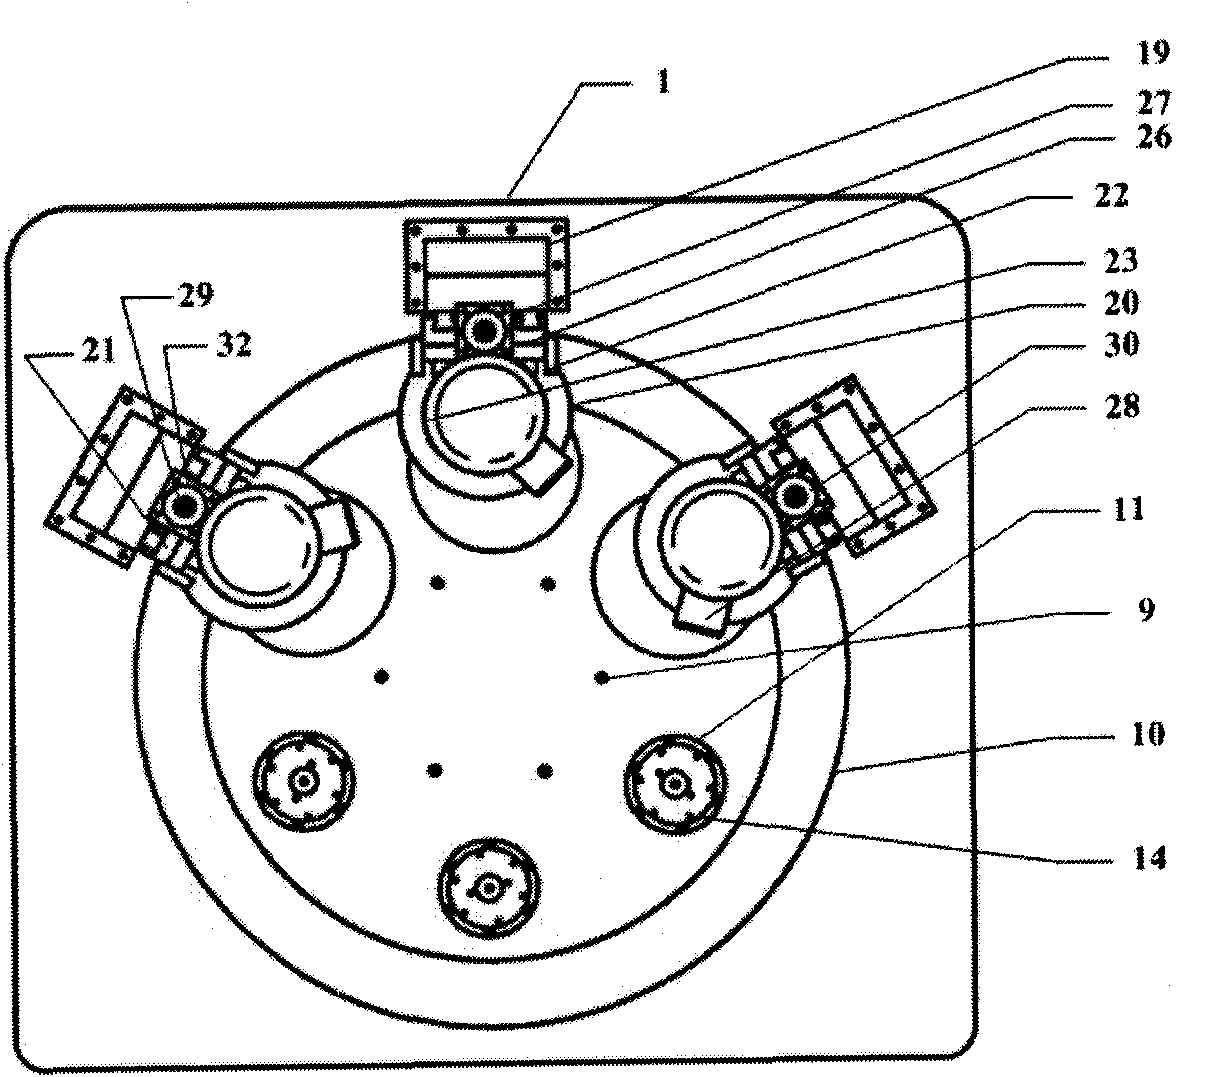 Multi-head high-speed grinder